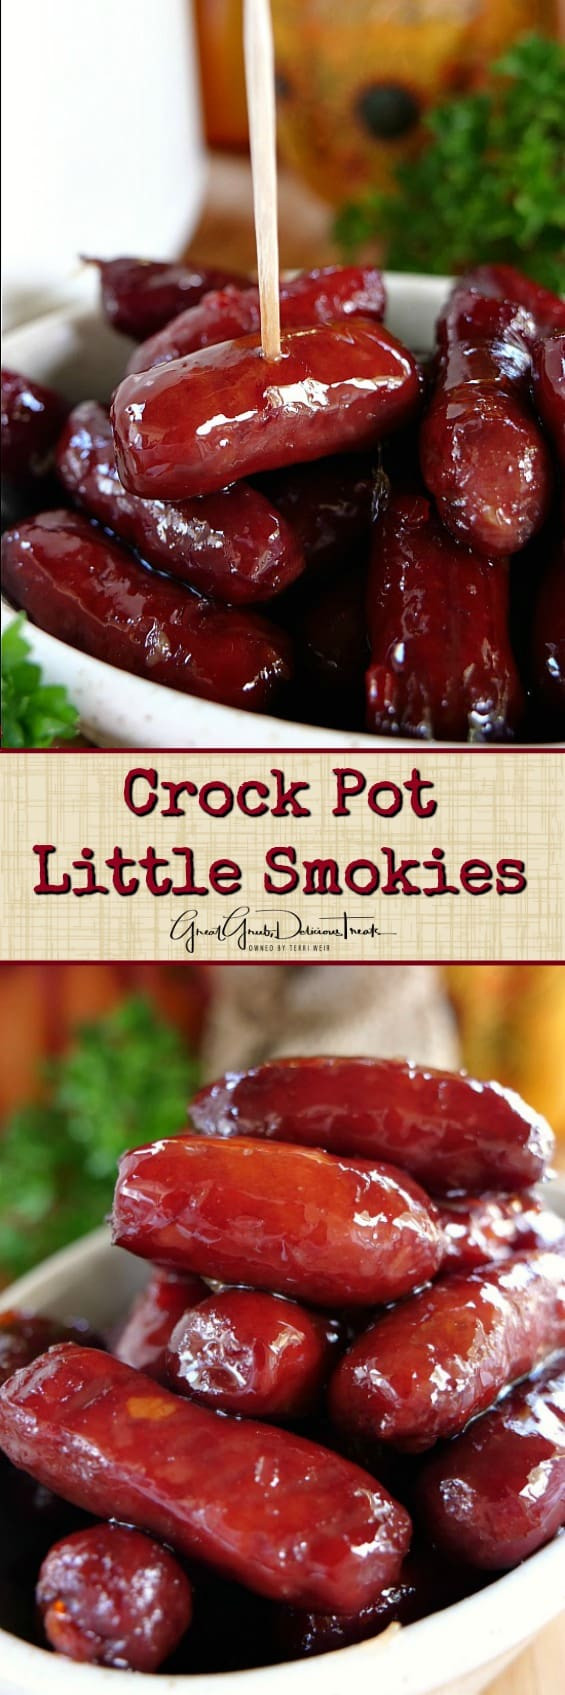 Lil Smokies Crock Pot Keto Crock Pot Little Smokies Great Grub Delicious Treats